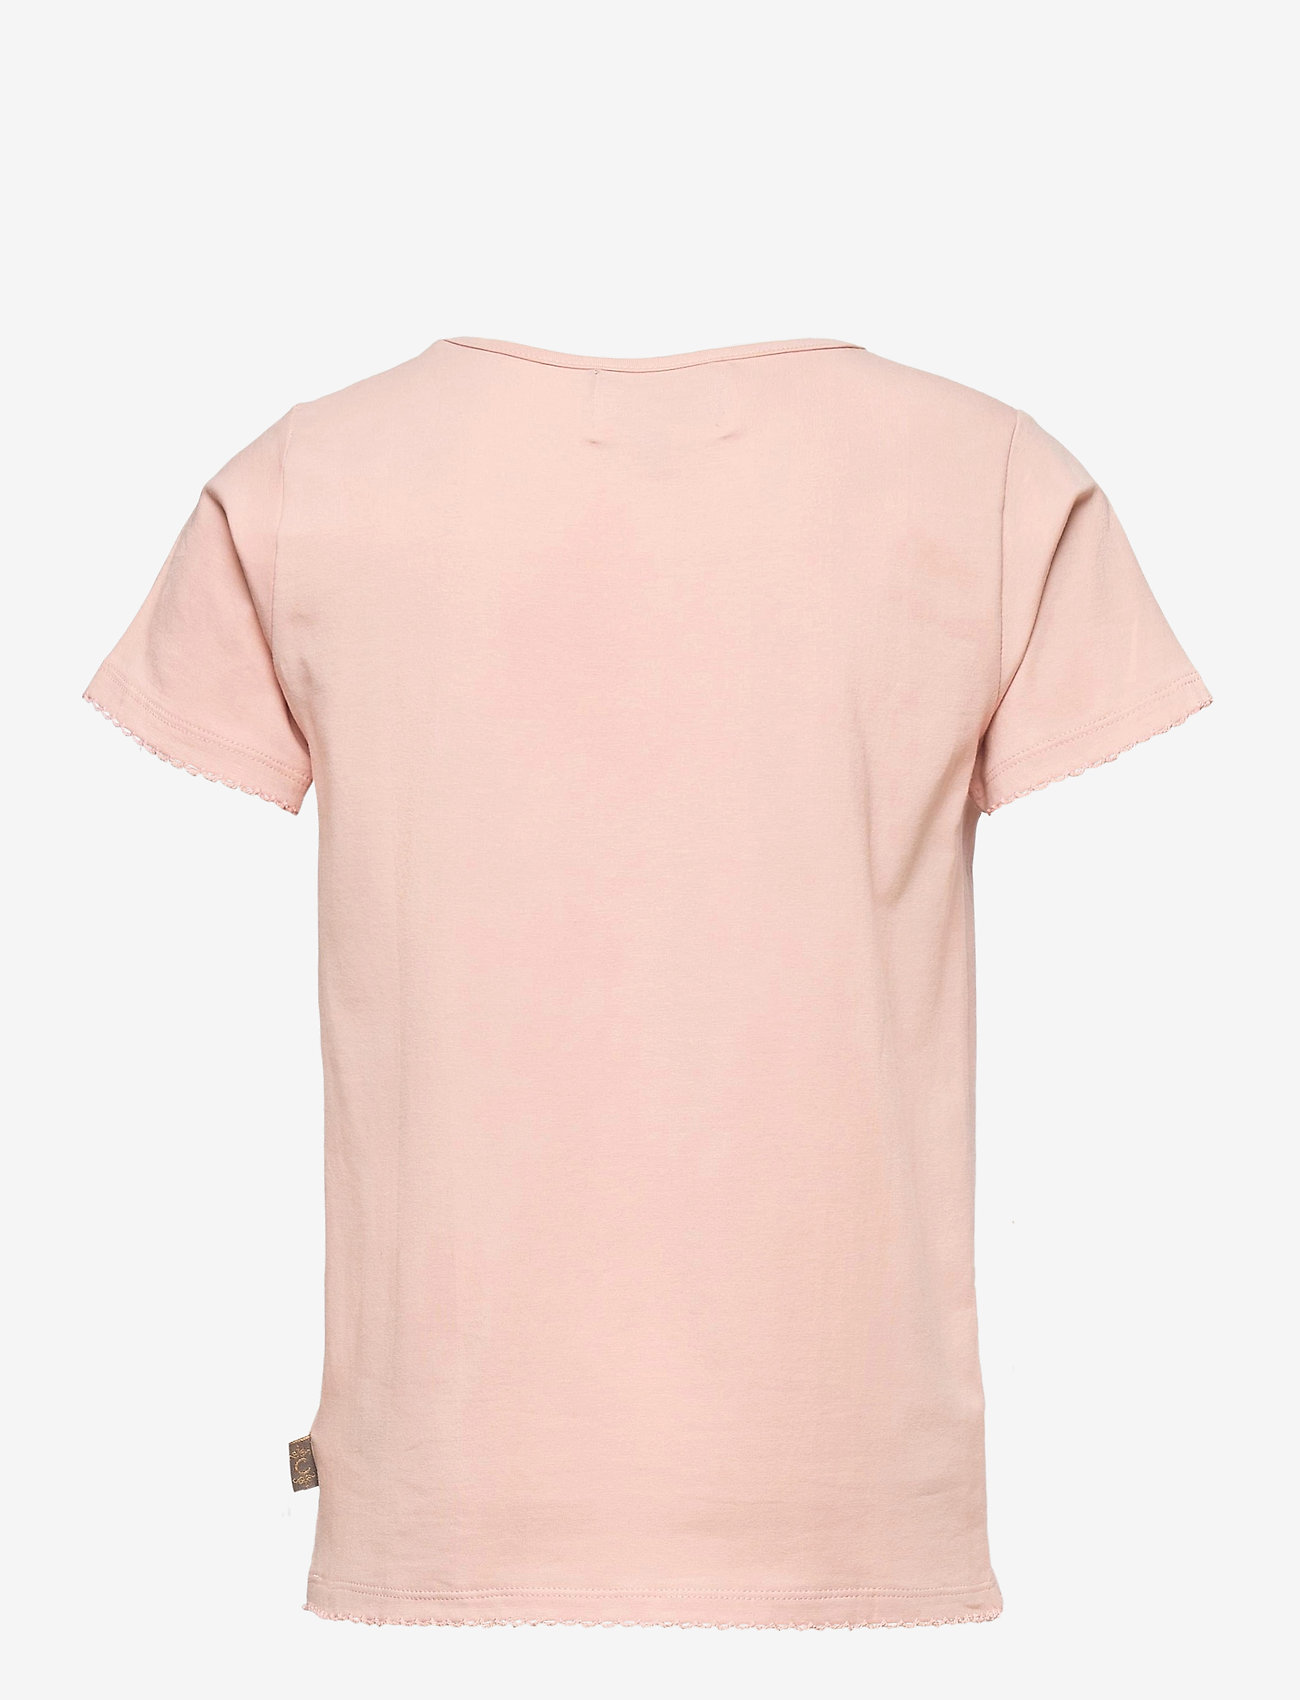 Creamie - Creamie T-shirt SS - kortermede t-skjorter - rose smoke - 1